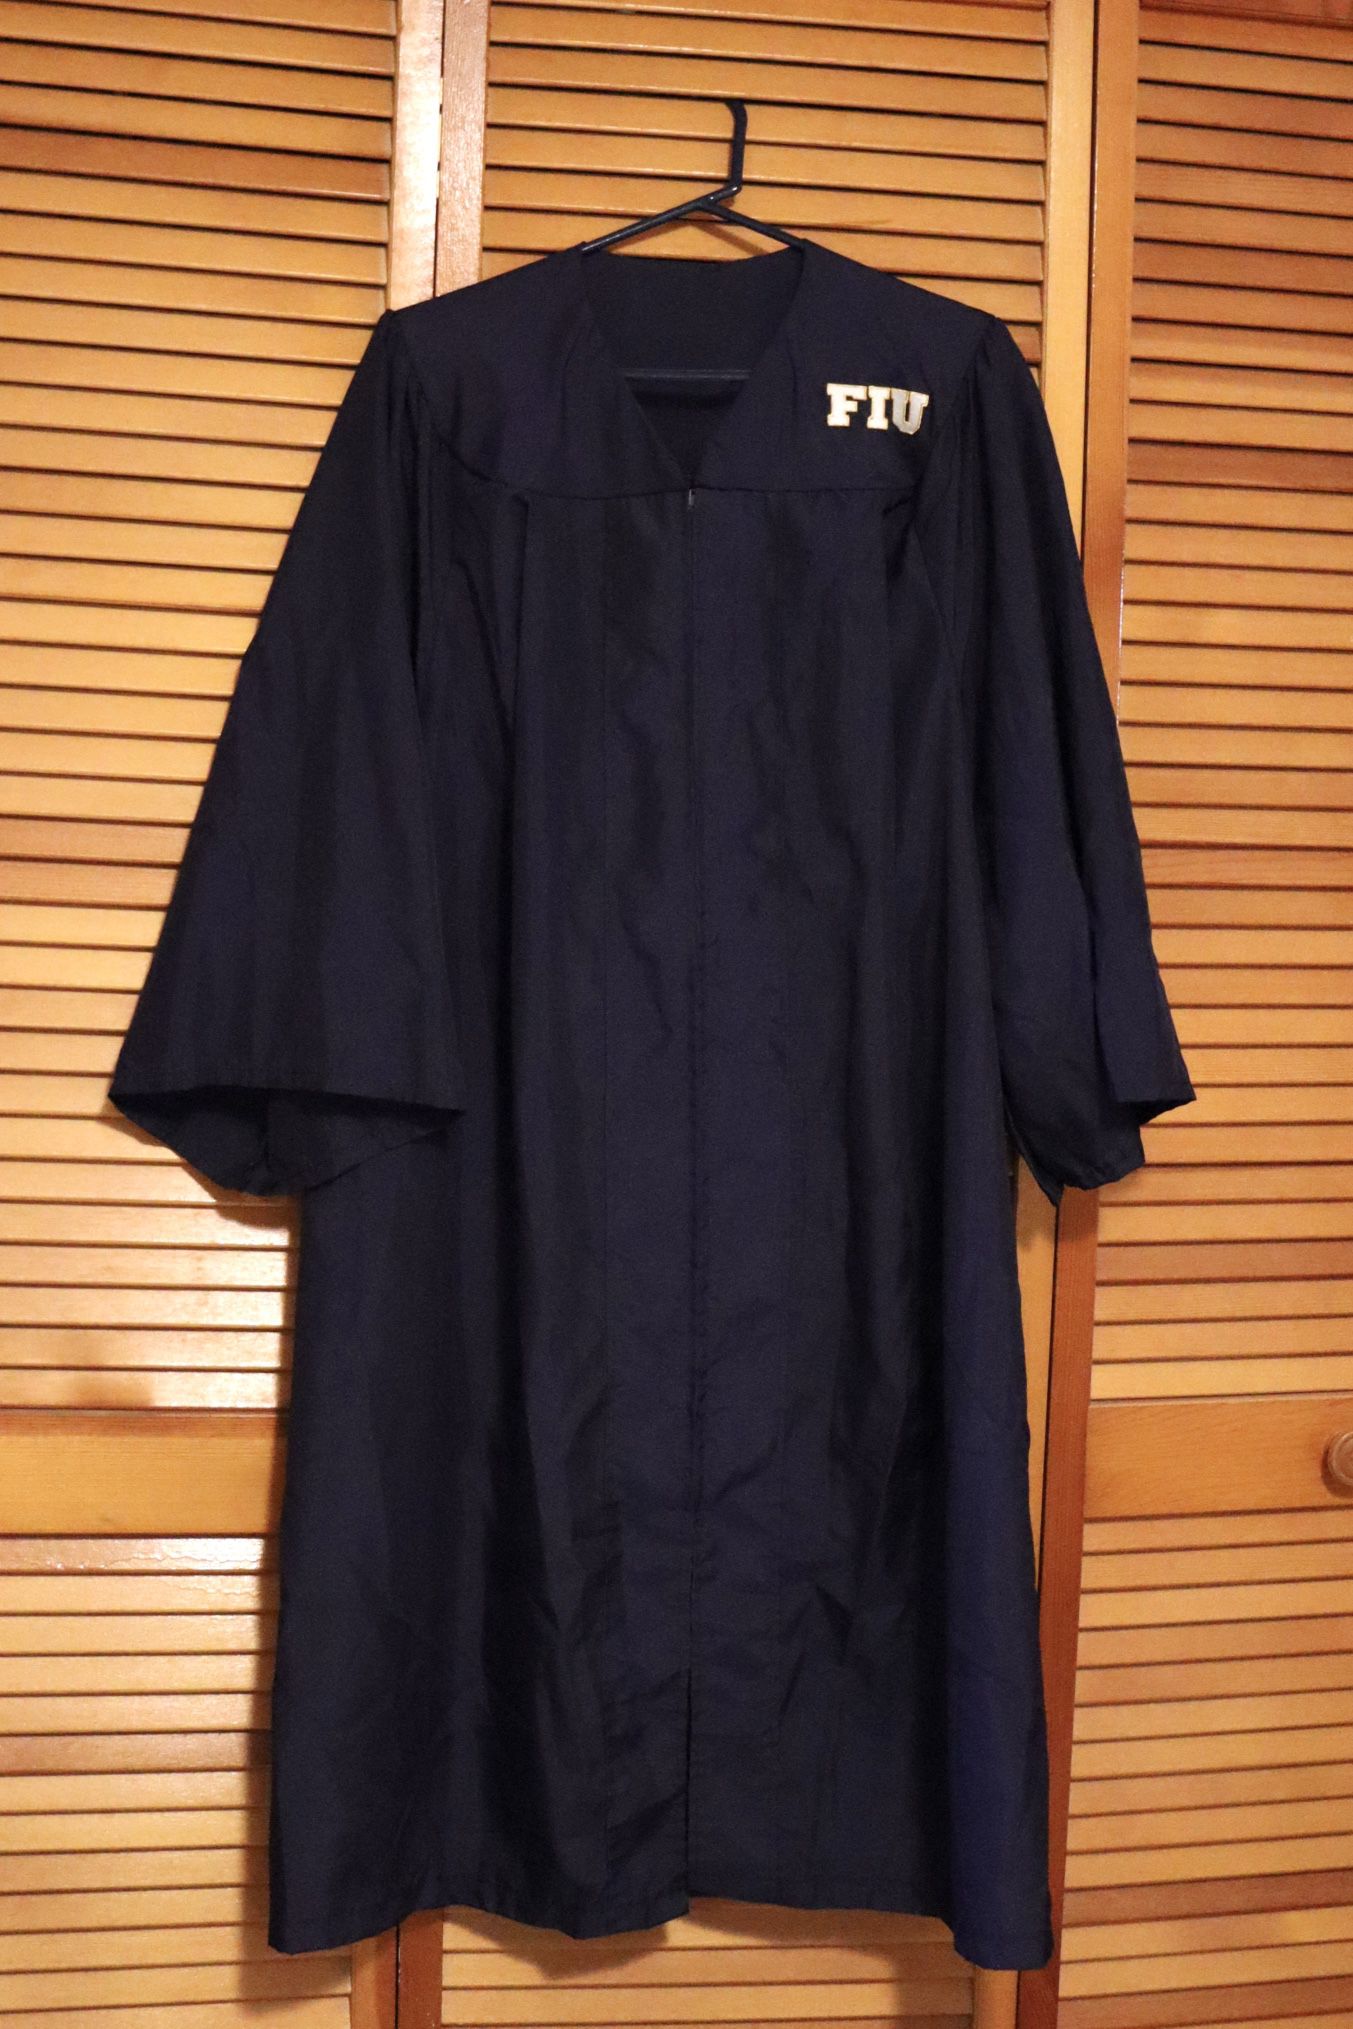 FIU Graduation Gown - 5’4”